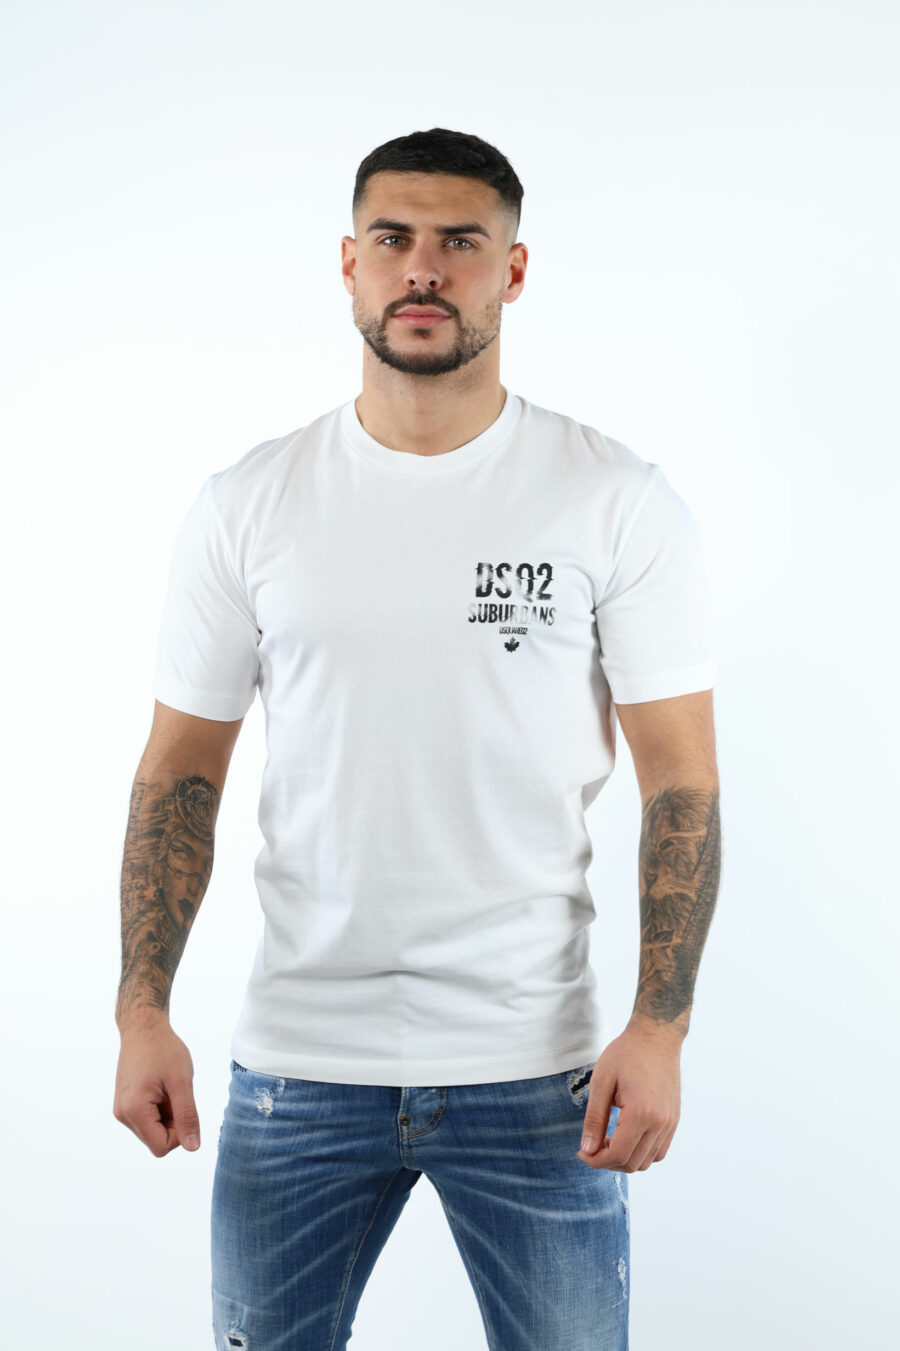 T-shirt white with minilogue "suburbans" black - 106623